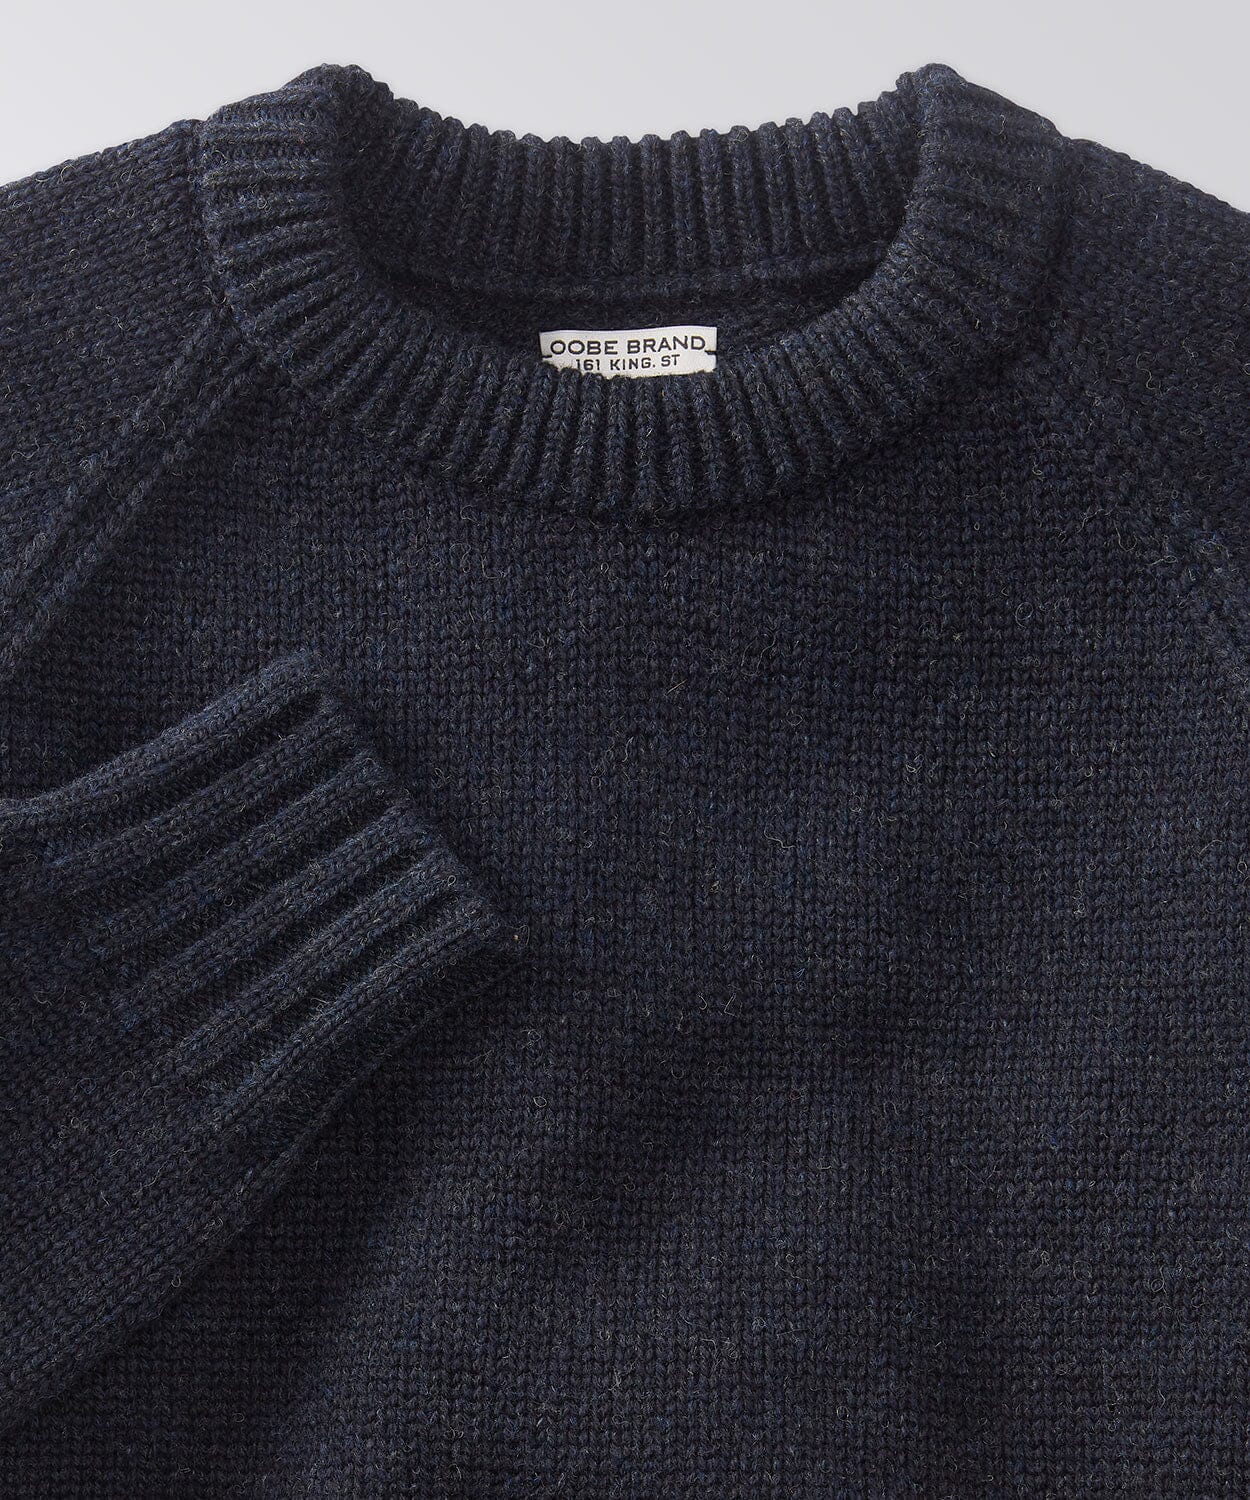 Mens Edisto Crew Neck Wool Sweater | OOBE BRAND